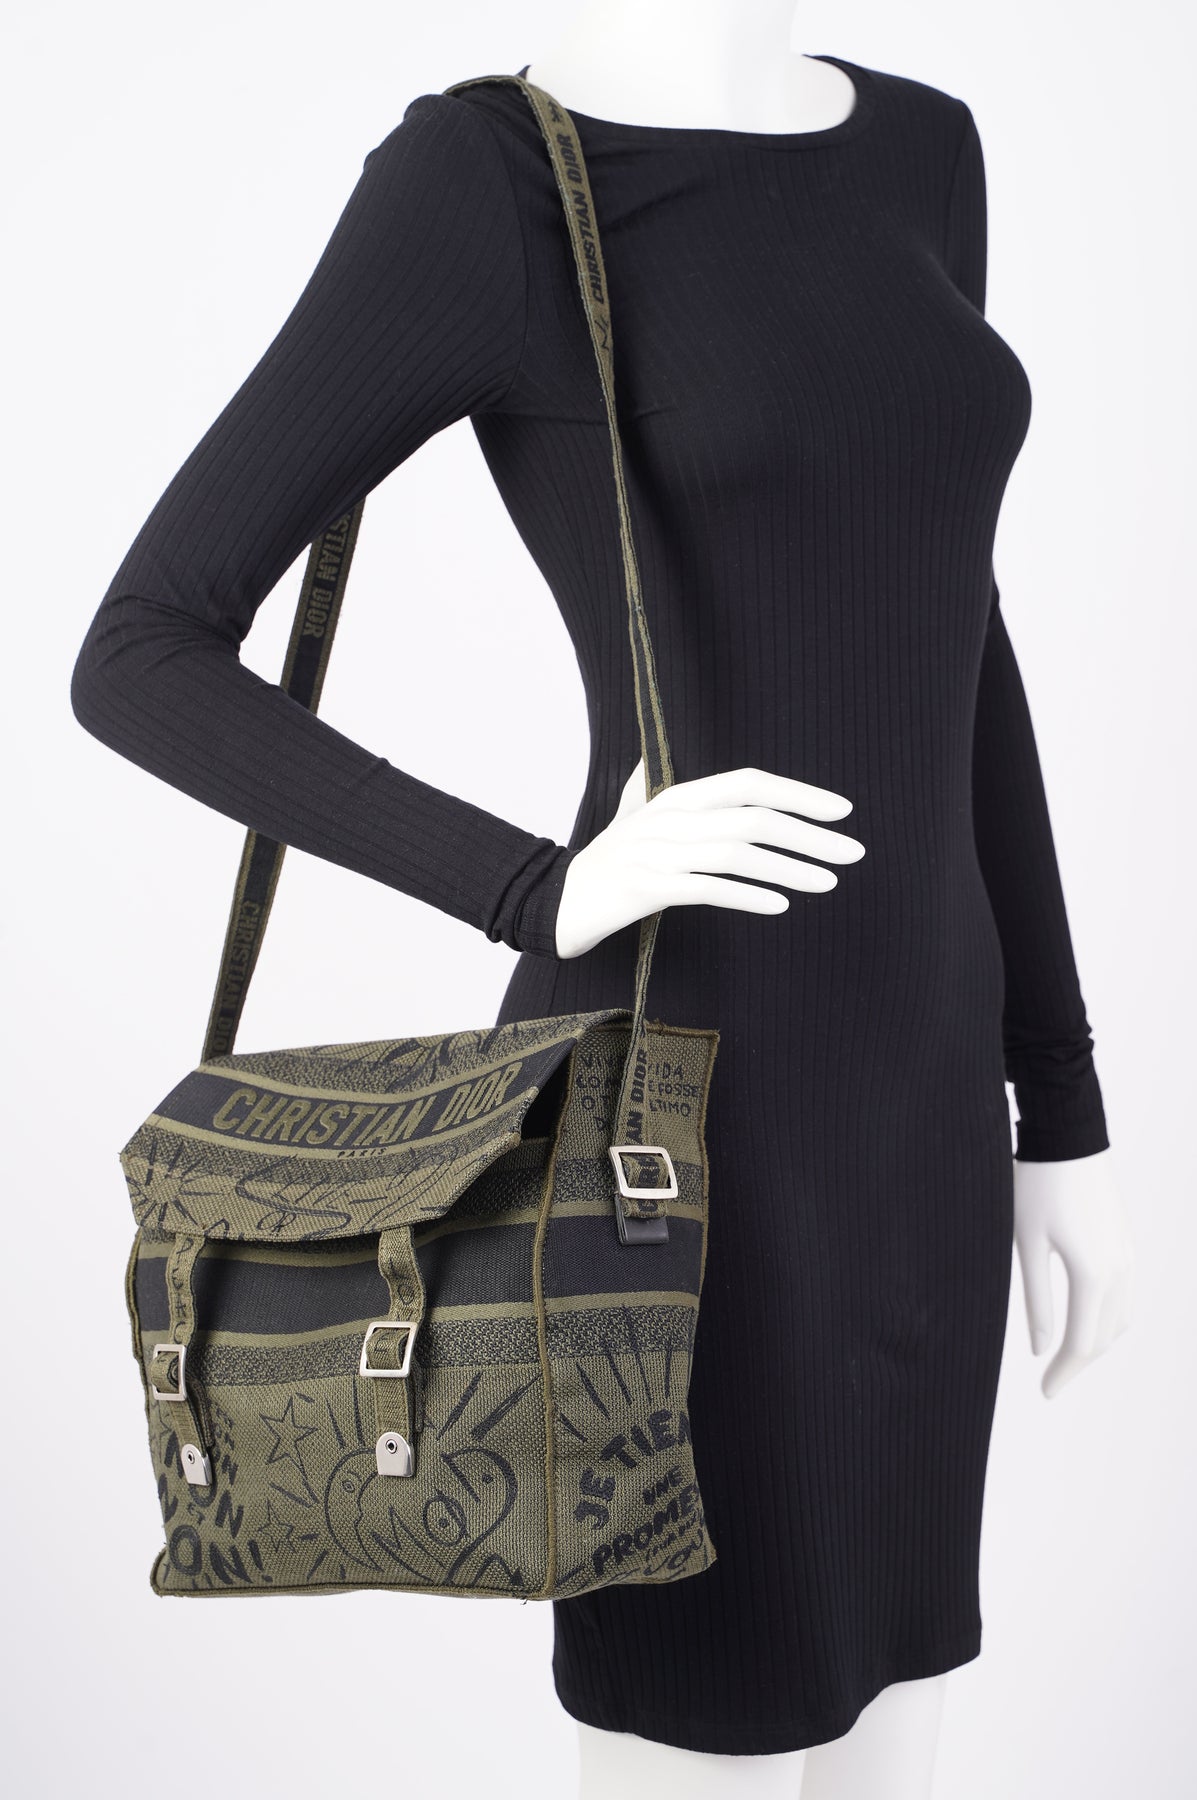 Trio Messenger Louis Vuitton Bags for Men - Vestiaire Collective